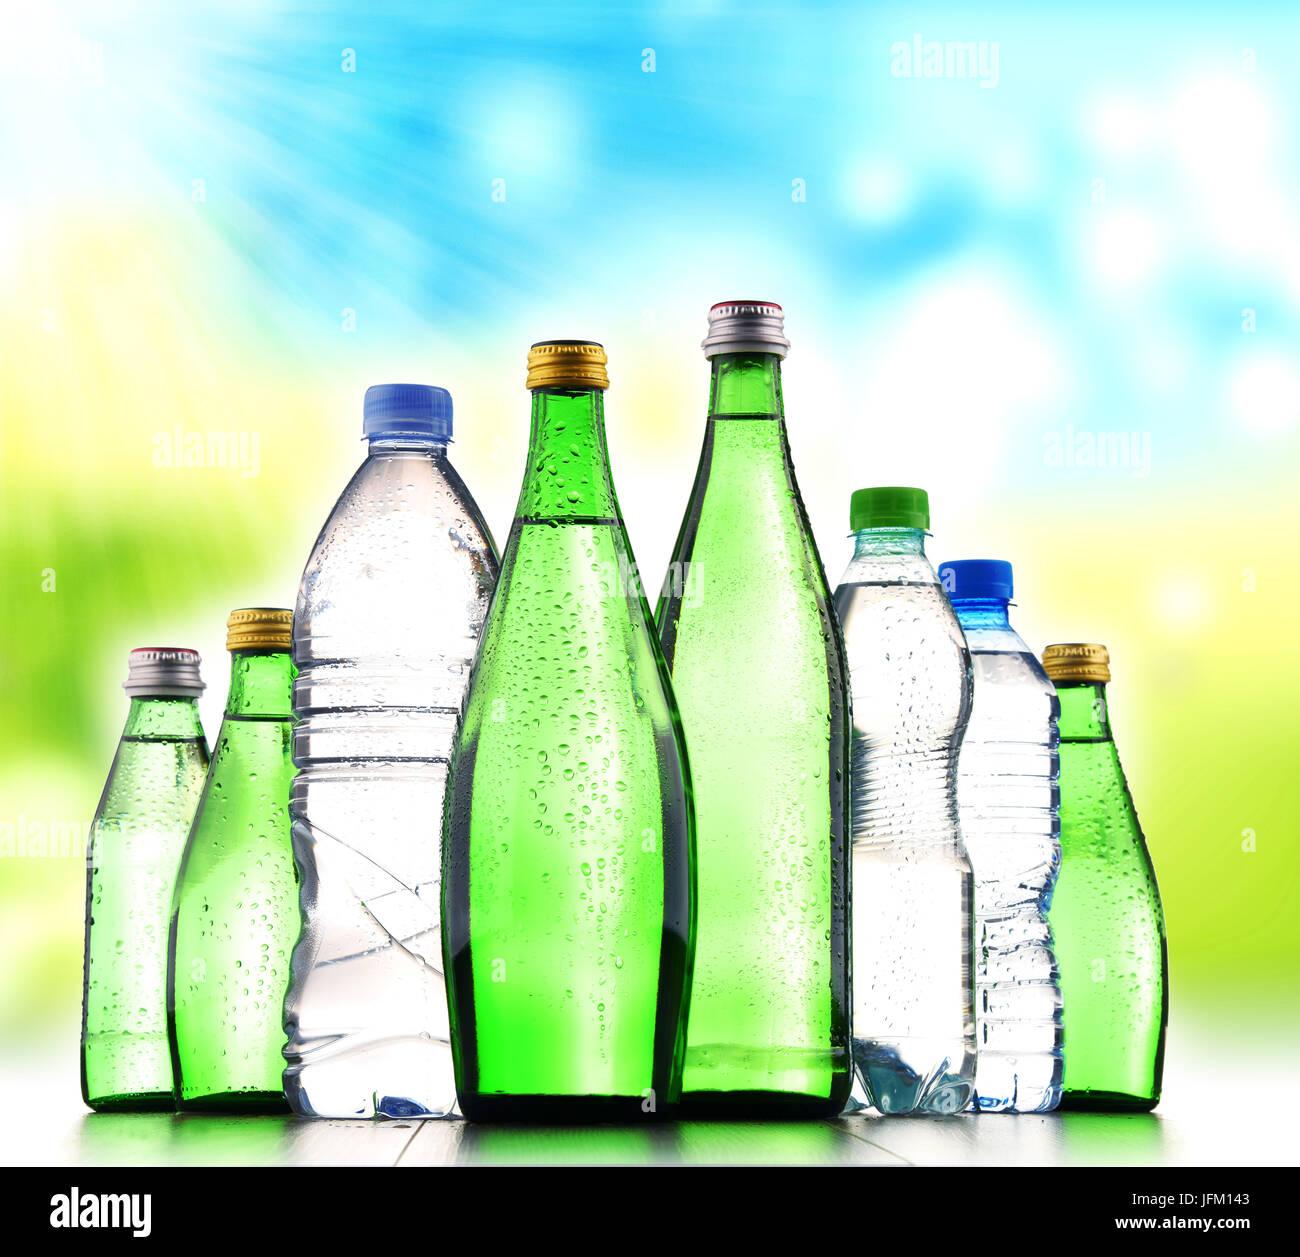 Diferentes tipos de botellas de agua mineral. Foto de stock